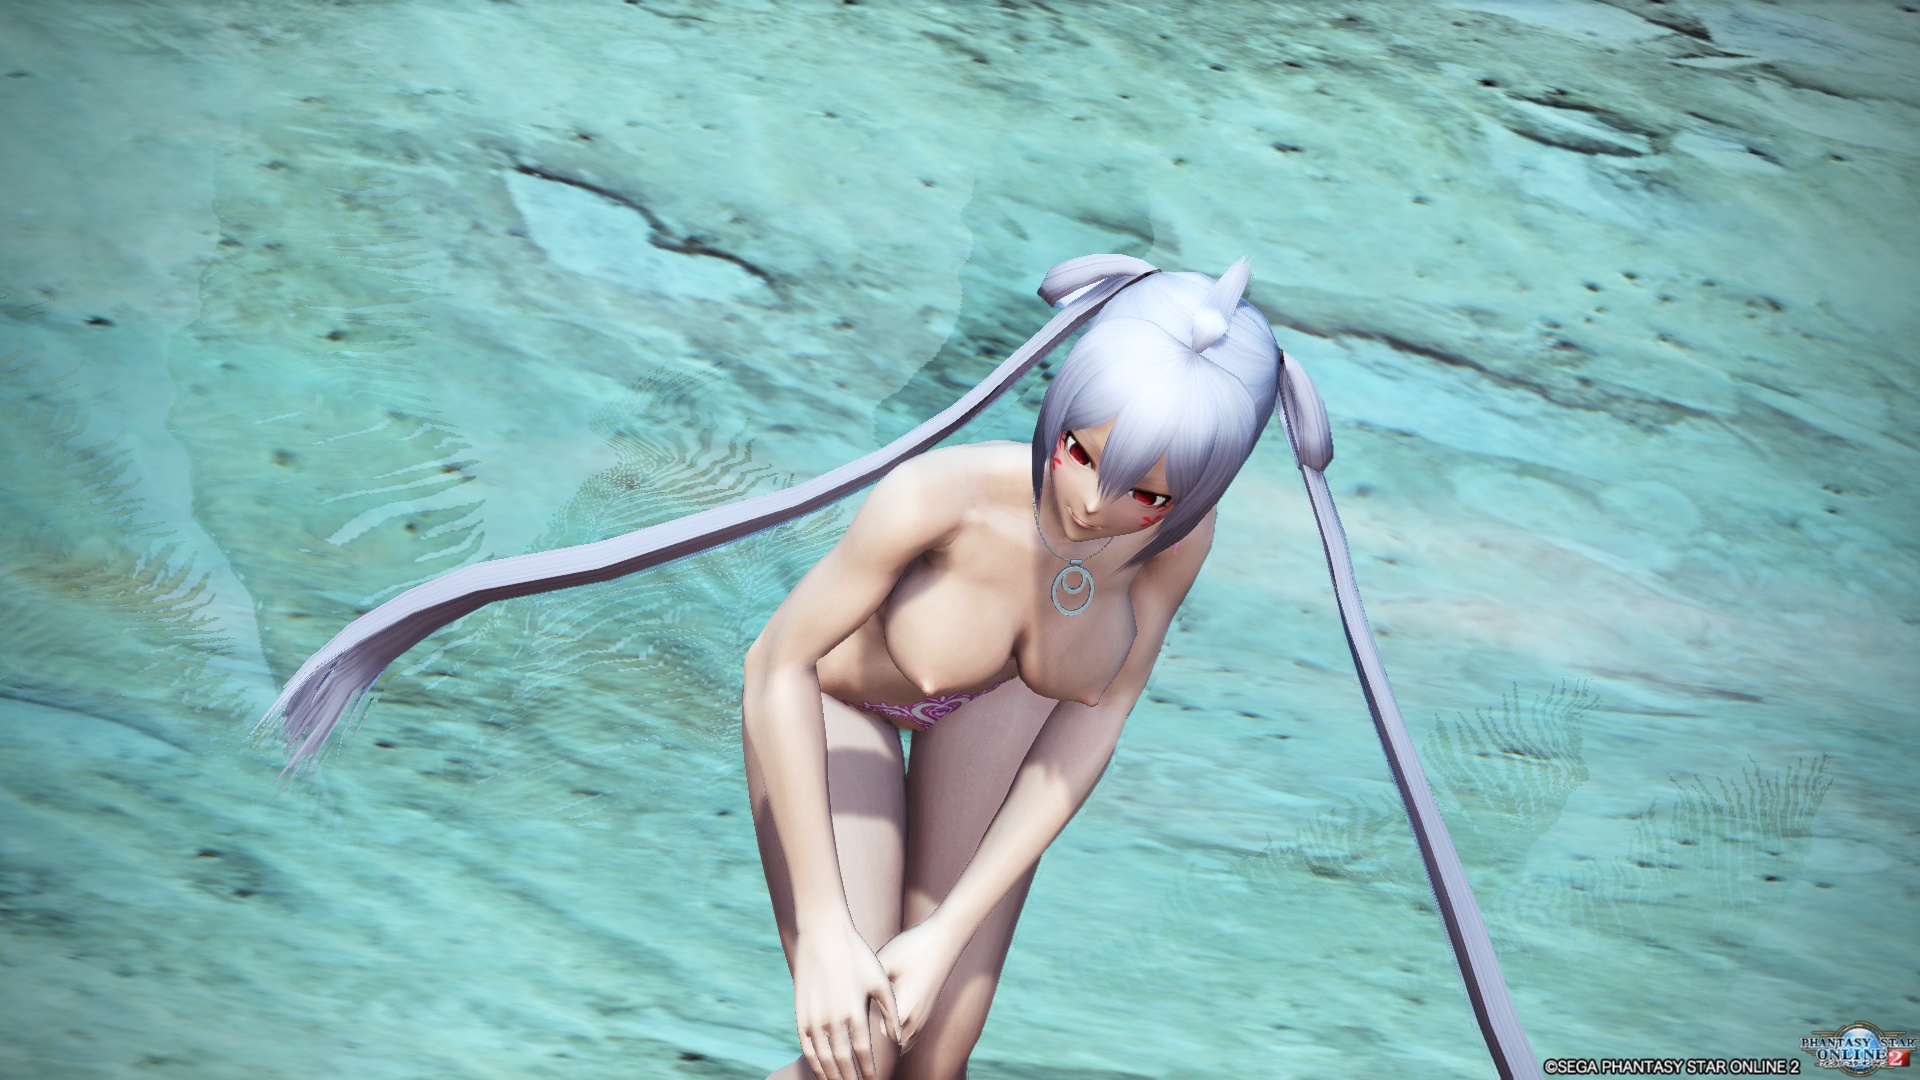 Phantasy Star Phantasy Star Online 2 Highres Mod 3d Nipples Nude Pso2 Image View